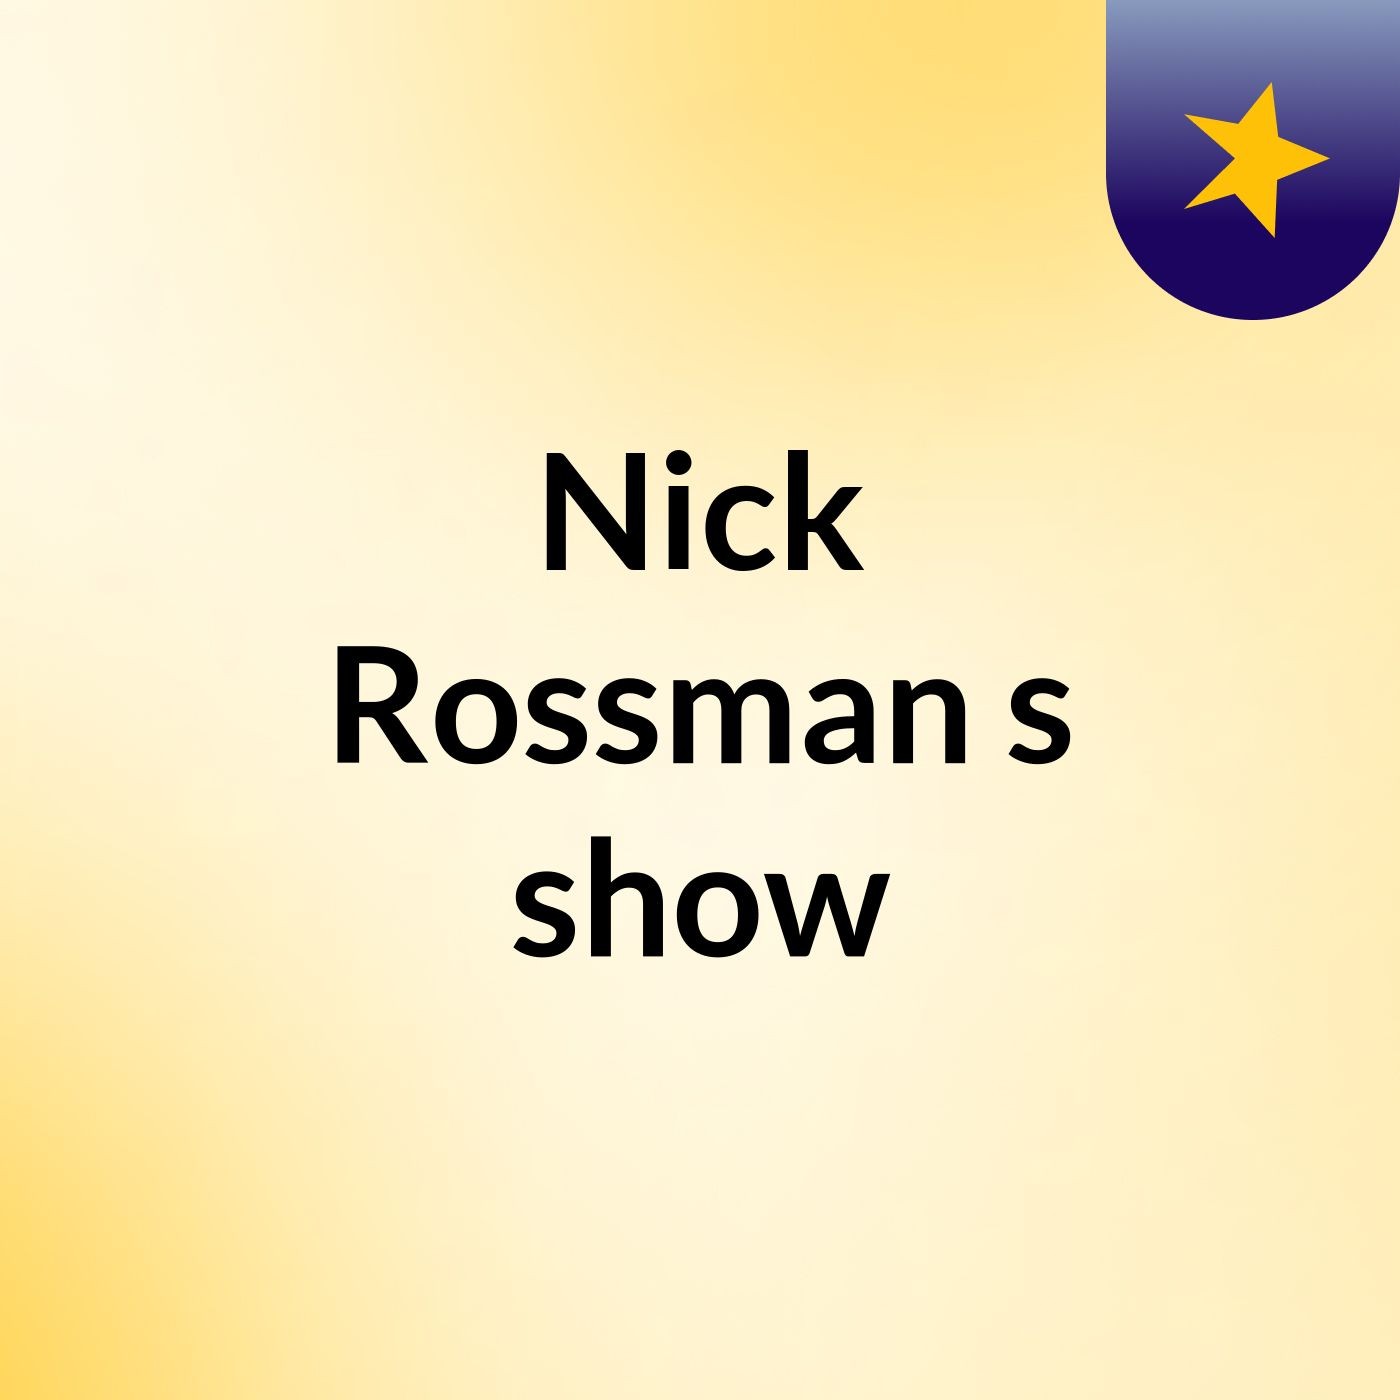 Nick Rossman's show